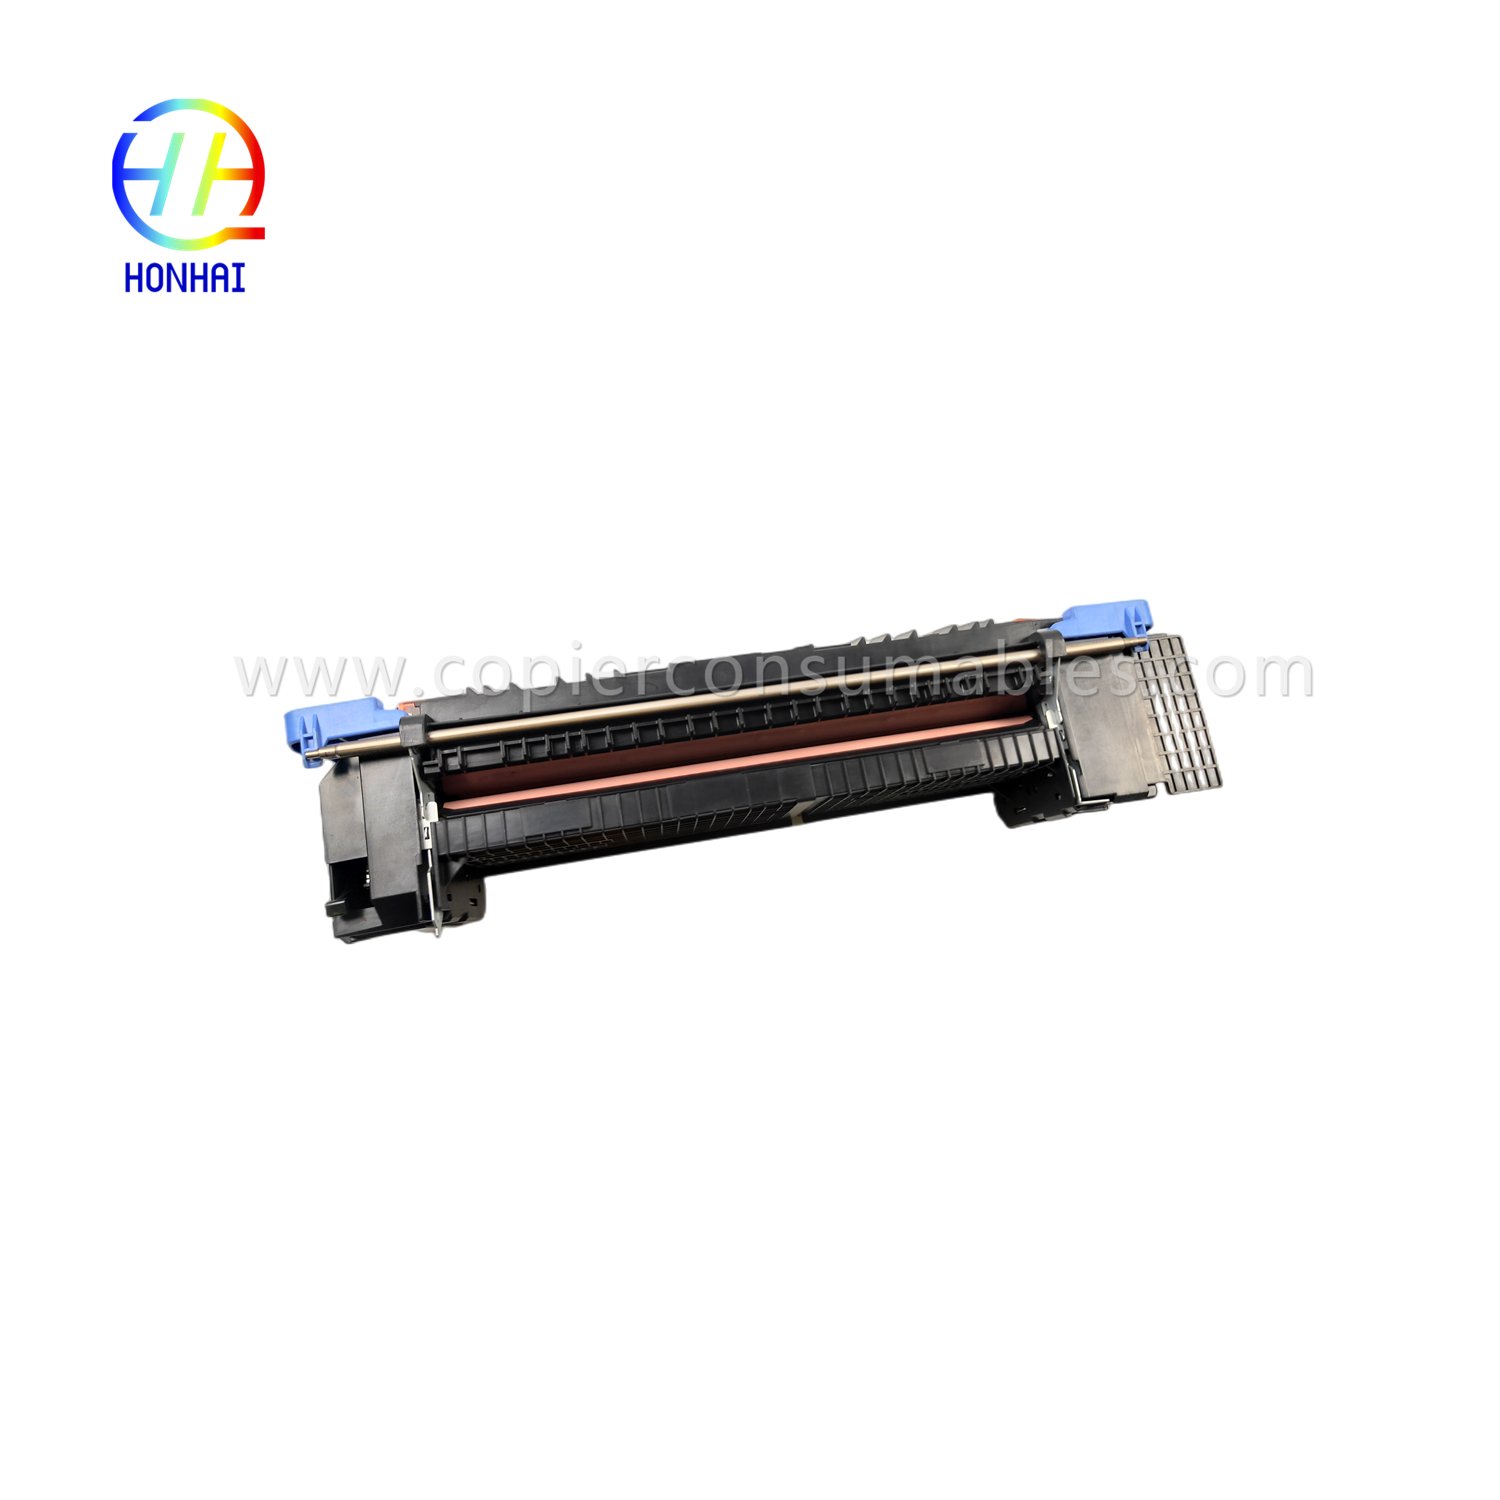 https://c585.goodao.net/fuser-assembly-unit-for-hp-m855-m880-m855dn-m855xh-m880z-m880z-c1n54-67901-c1n58-67901-fusing-heating-fixing/